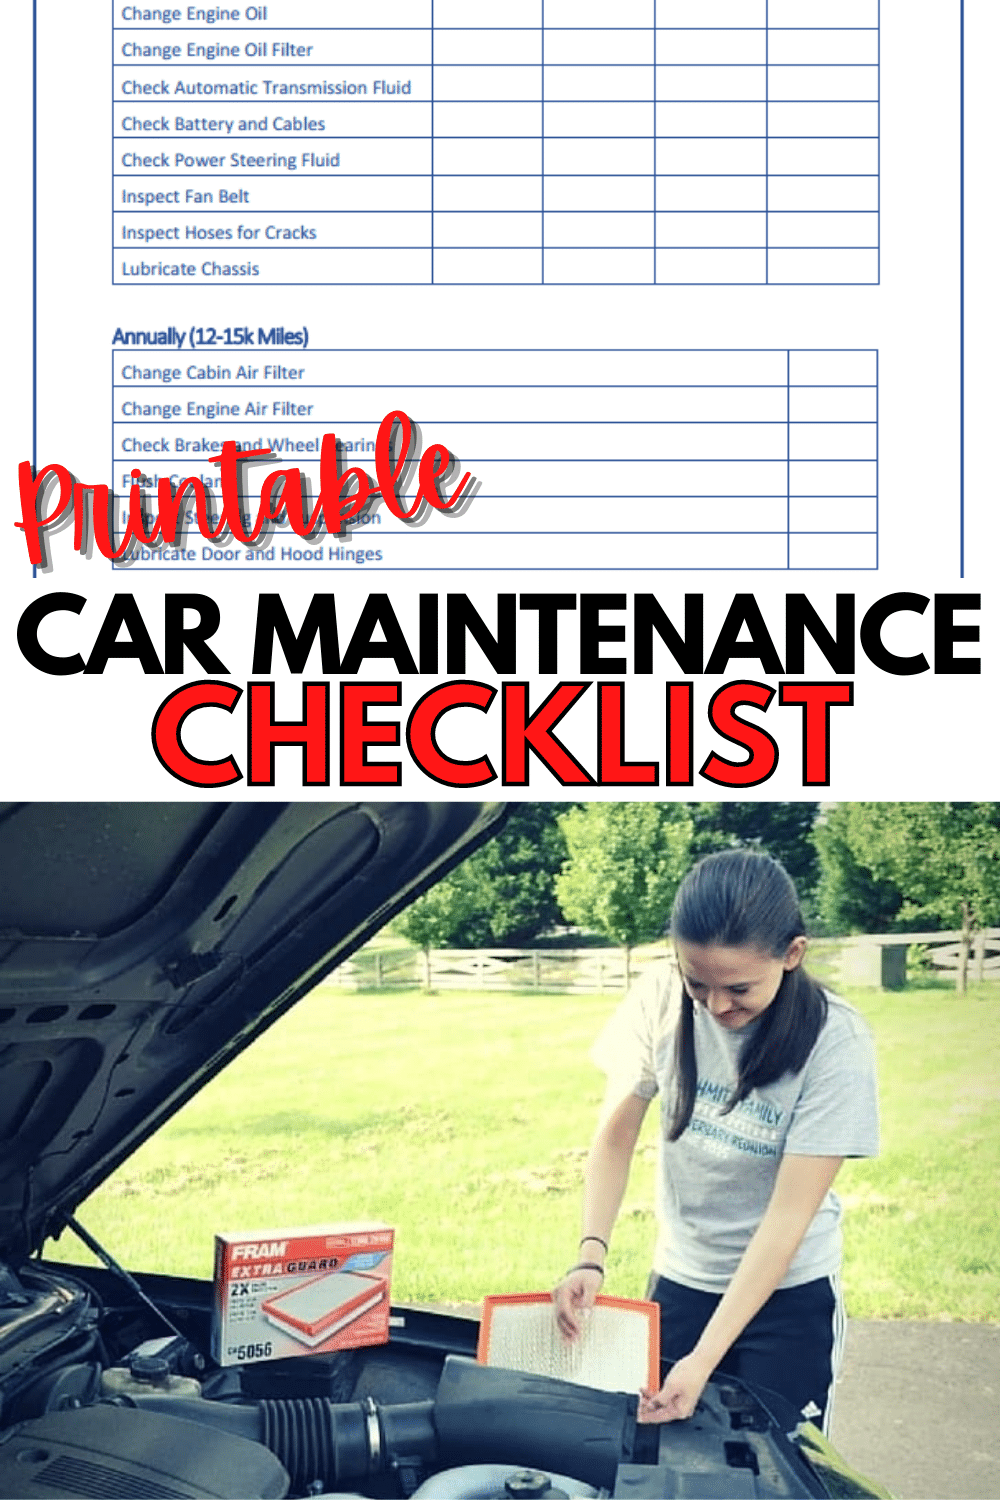 Print & keep this car maintenance checklist in your vehicle to make sure you perform regular maintenance to extend the life of your vehicle. #carmaintenance #checklist #freeprintable via @wondermomwannab